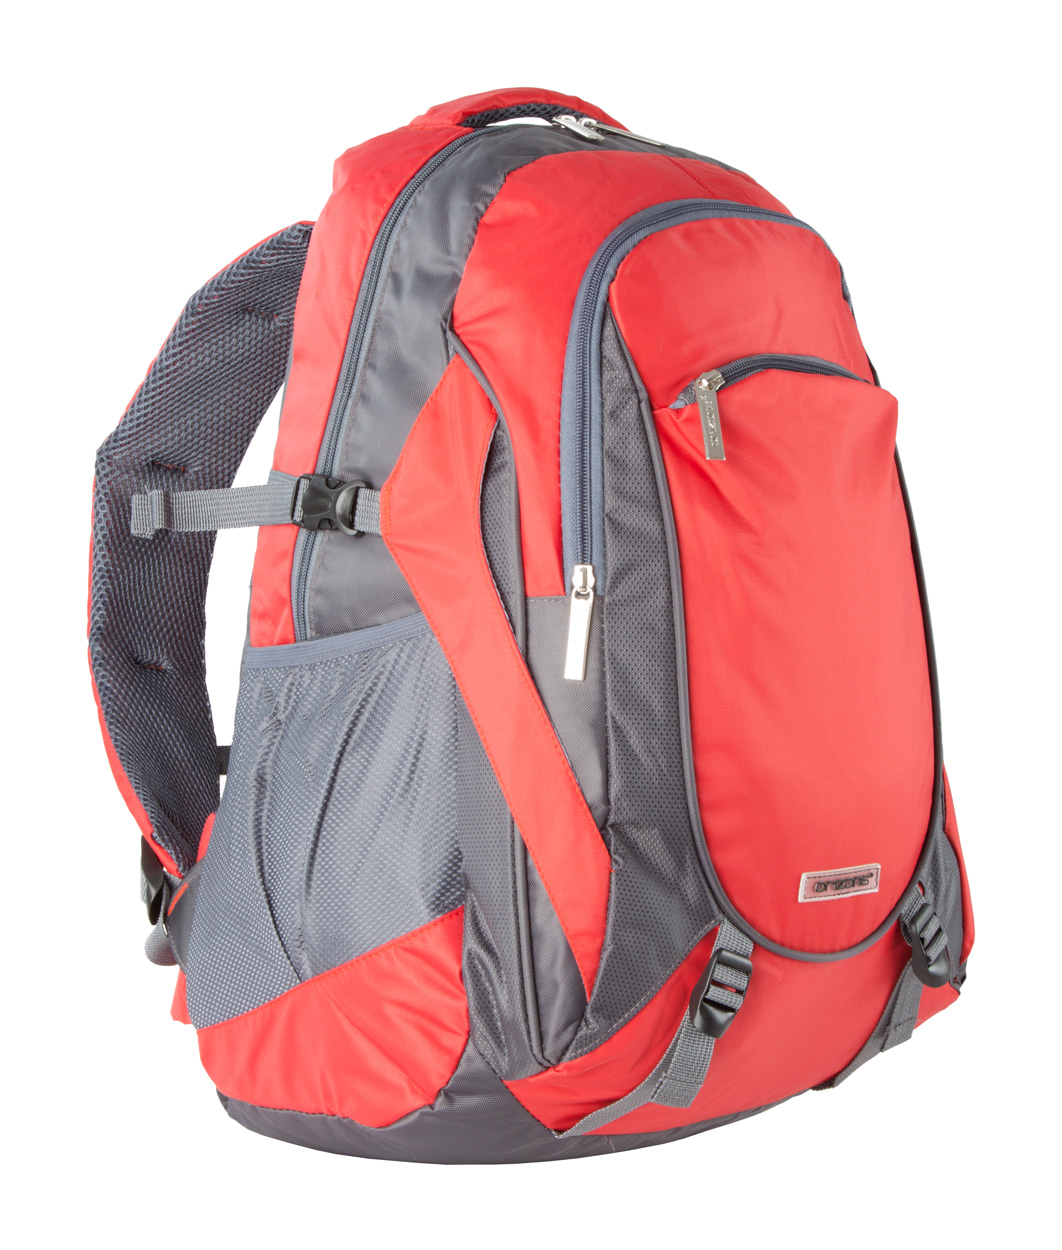 Promo  Virtux ruksak, crvene boje